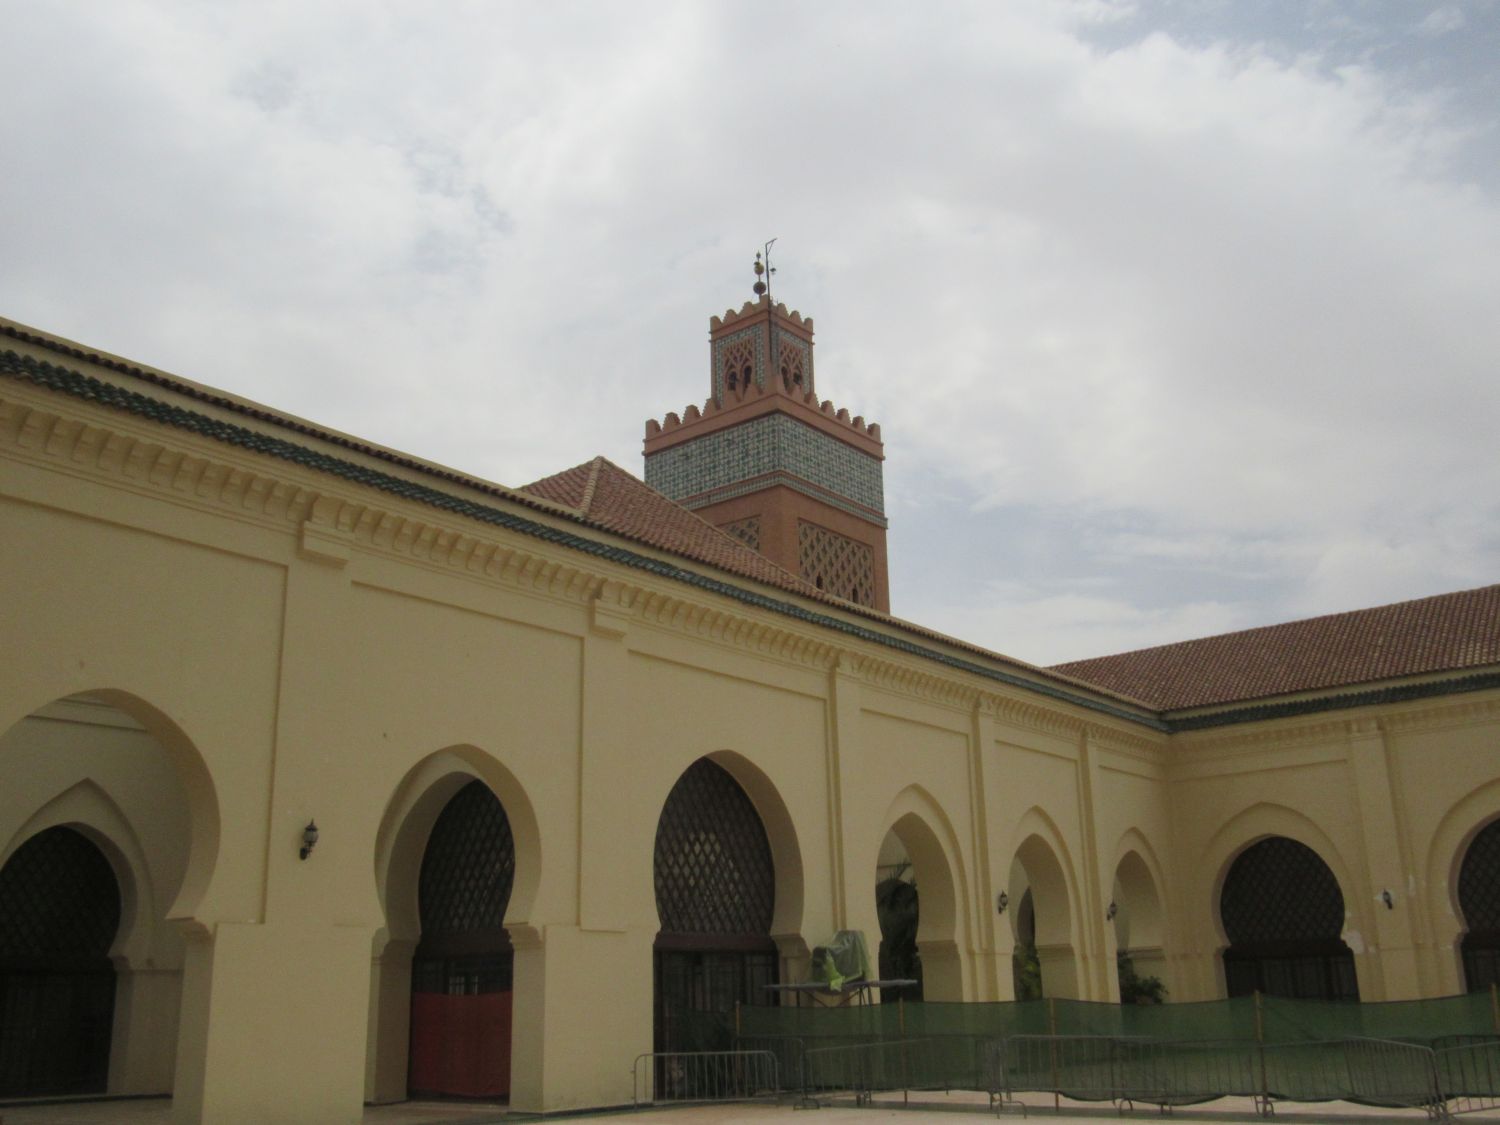 Interior view, courtyard and minaret